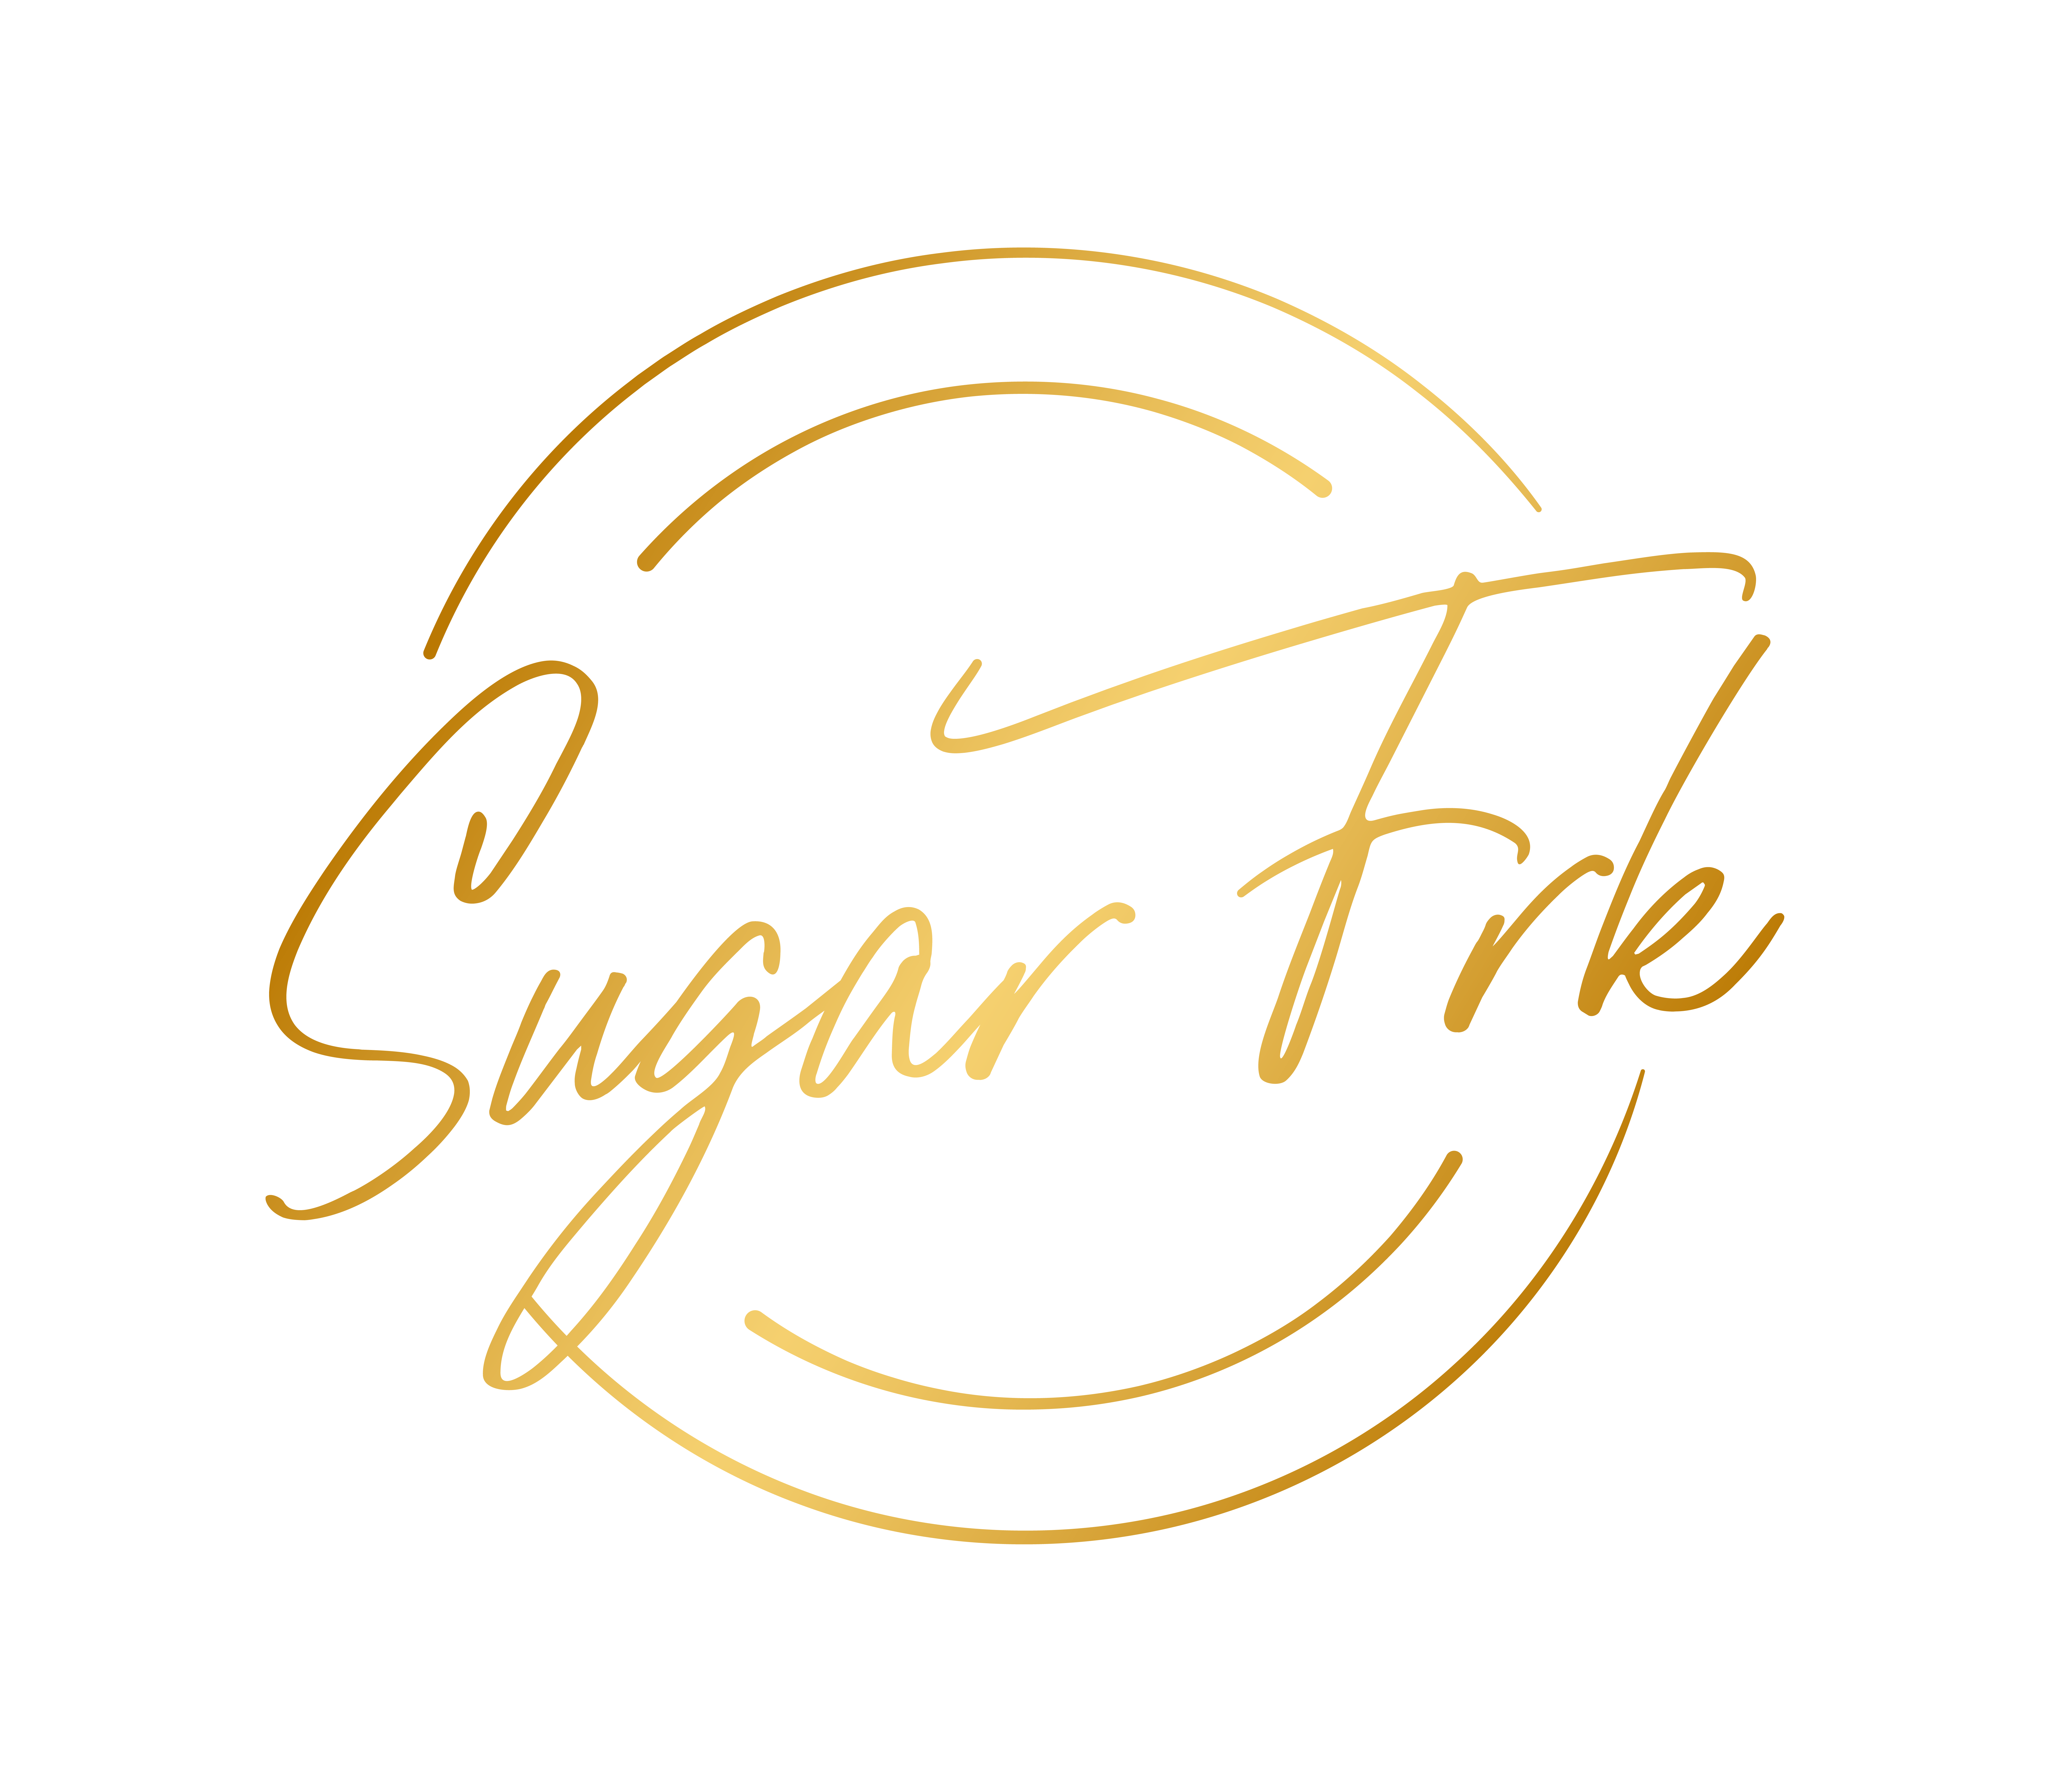 Sugar Dessert Shop - Branding Project